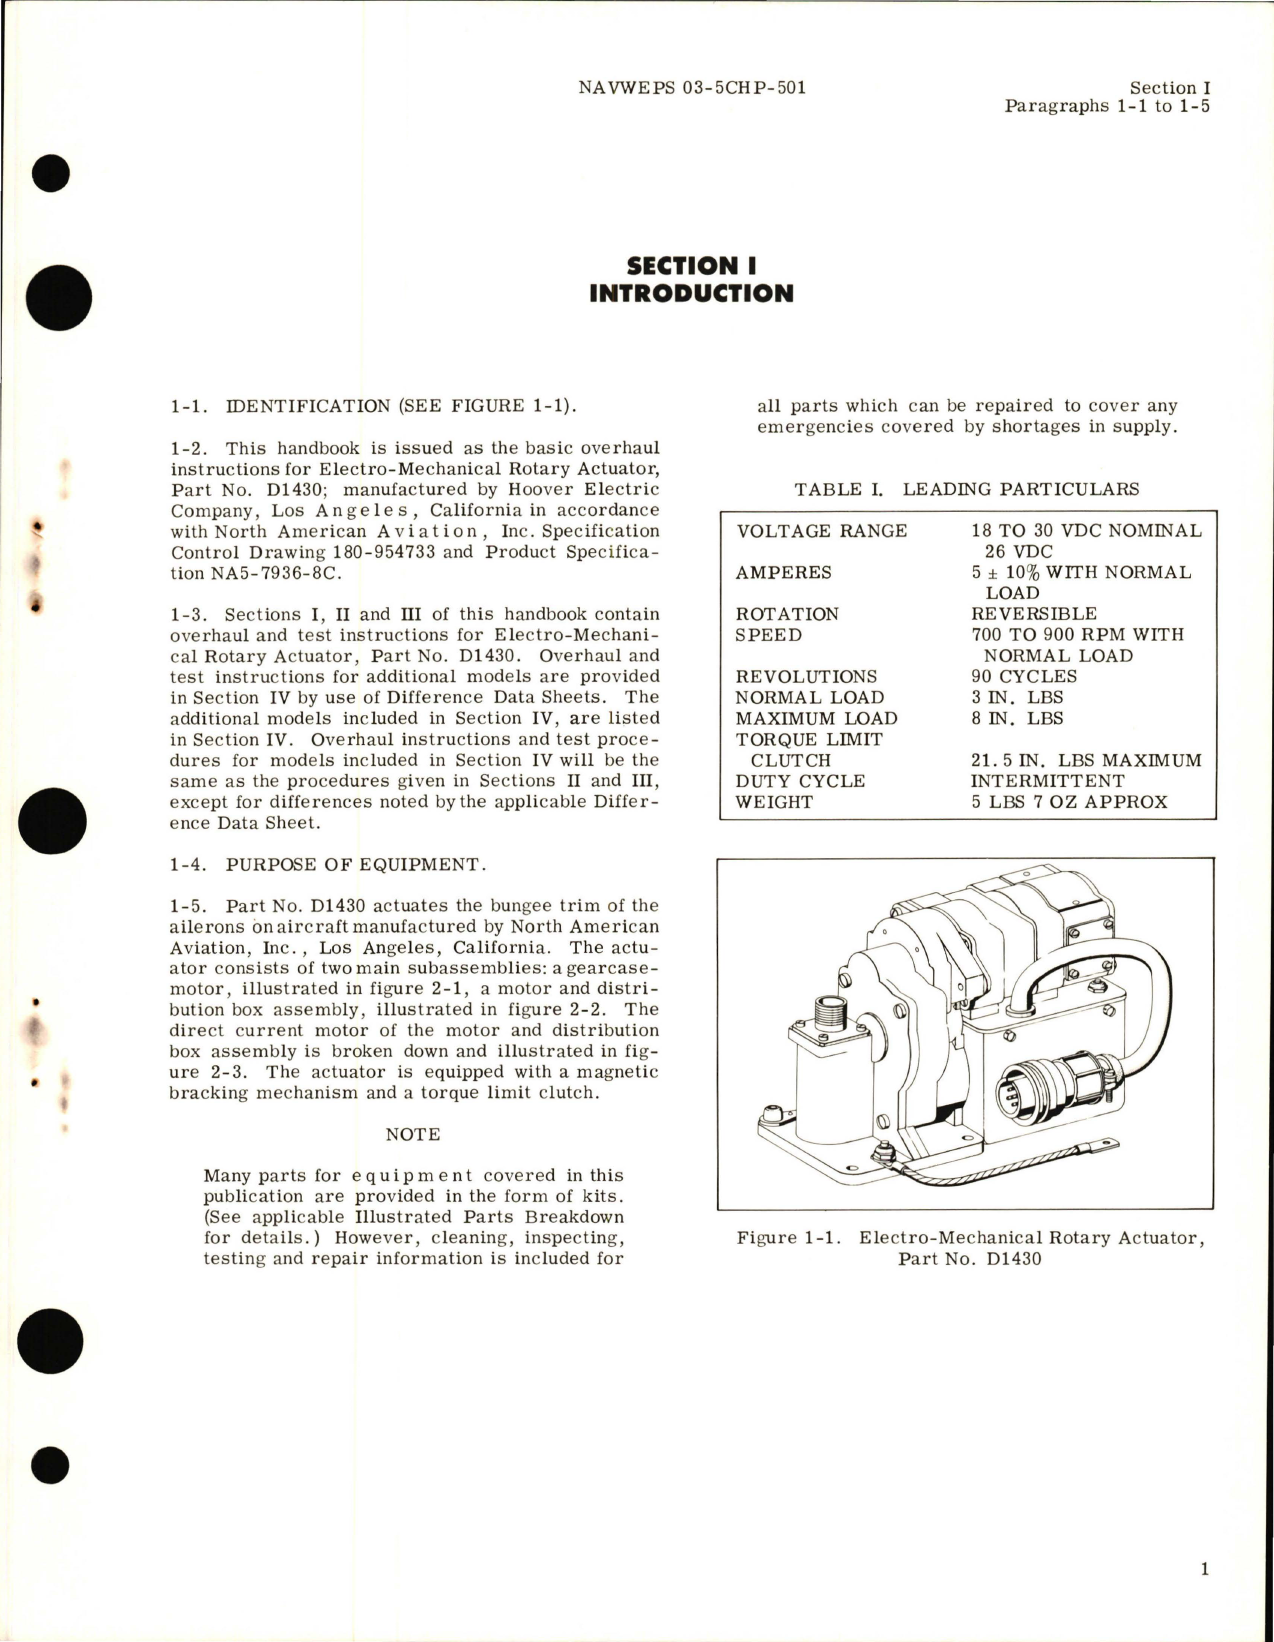 Sample page 5 from AirCorps Library document: Overhaul Instructions for Linear Actuators LA 2015-7, LA 2015-8, LA 2015-9, LA 2015-10 